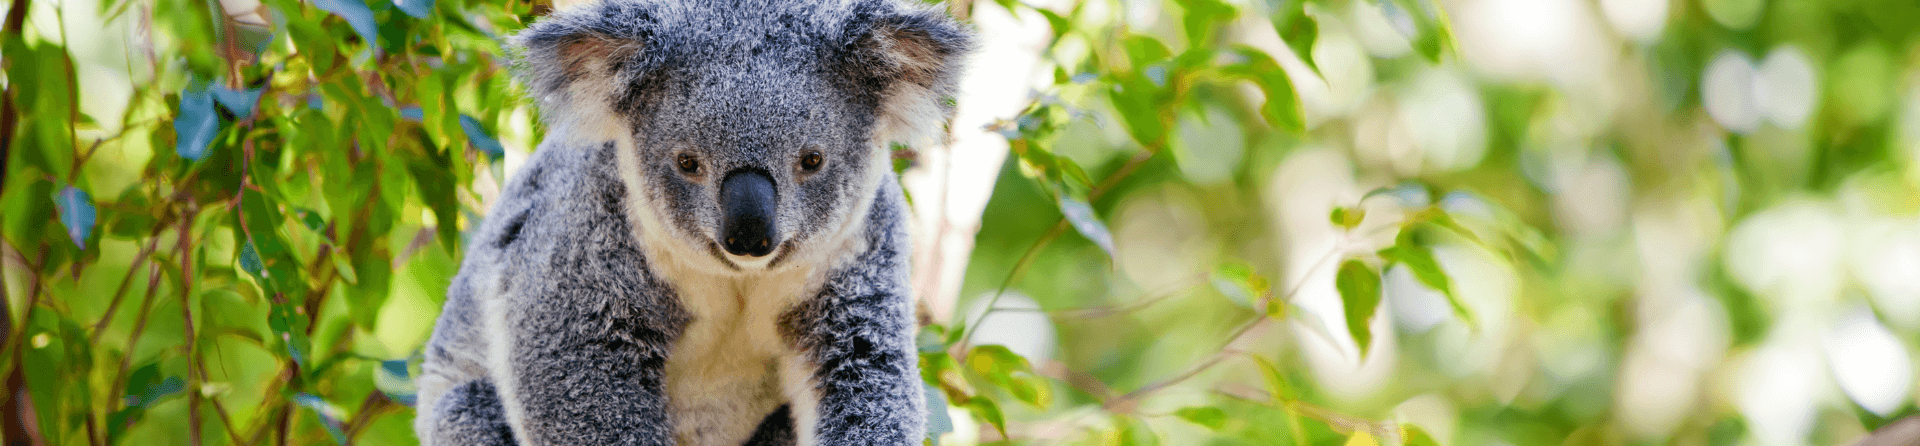 Where can I see koalas on Phillip Island?